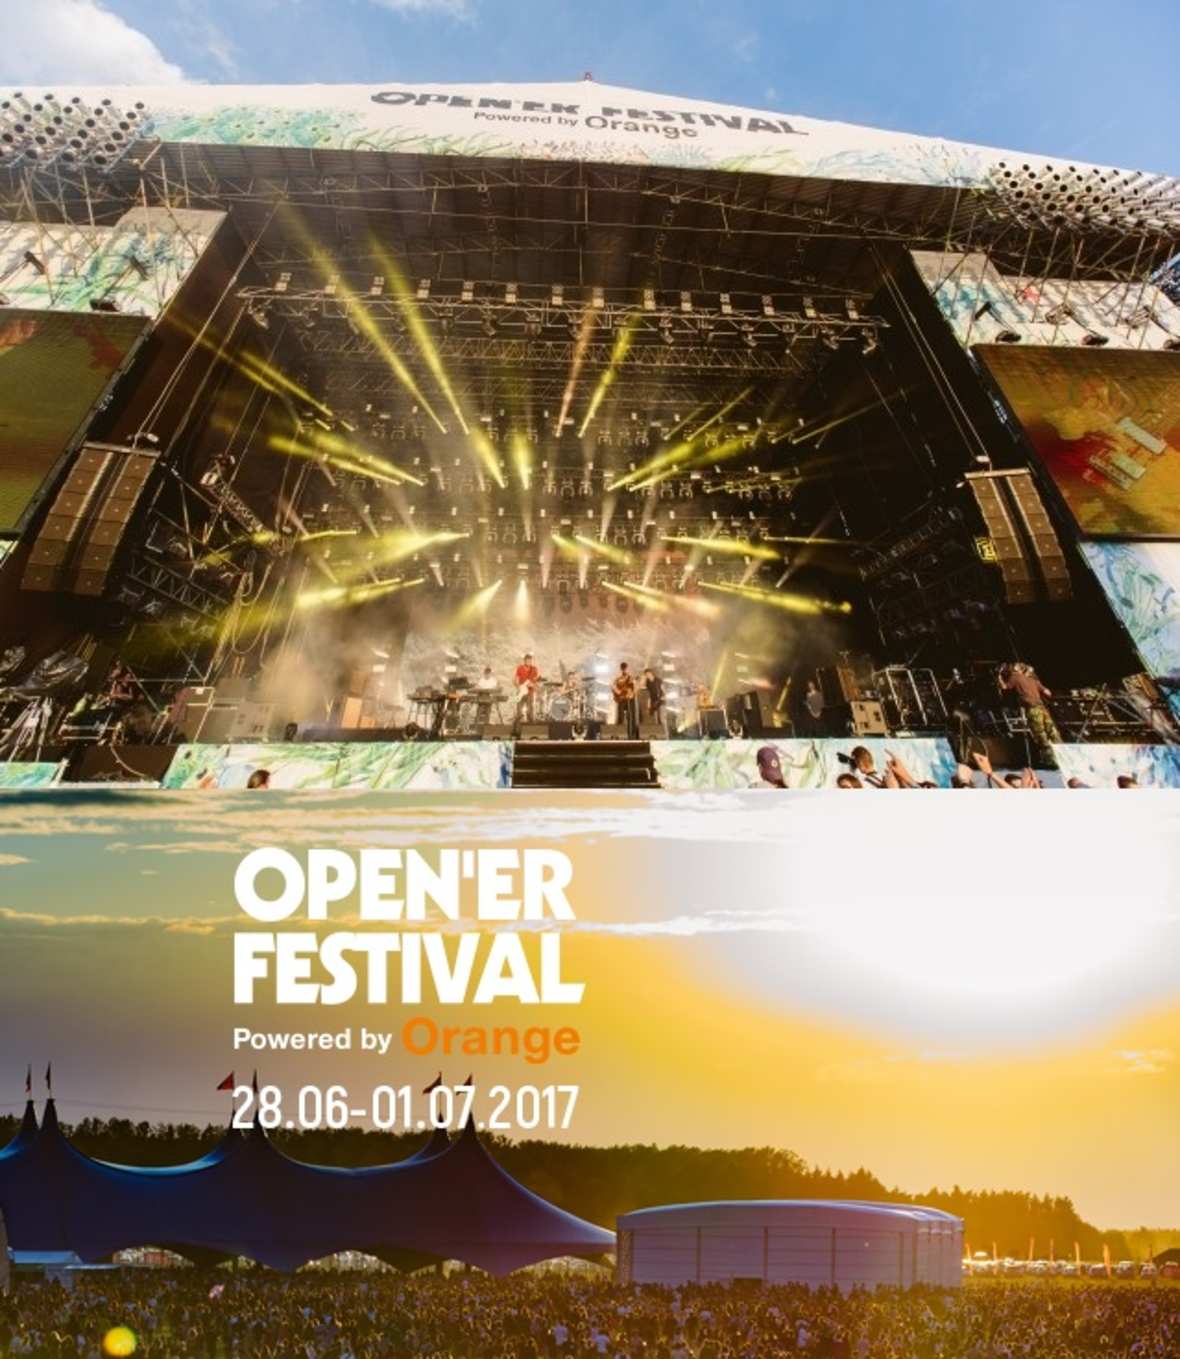 Open’er 2017 / Opener festiwal muzyczny